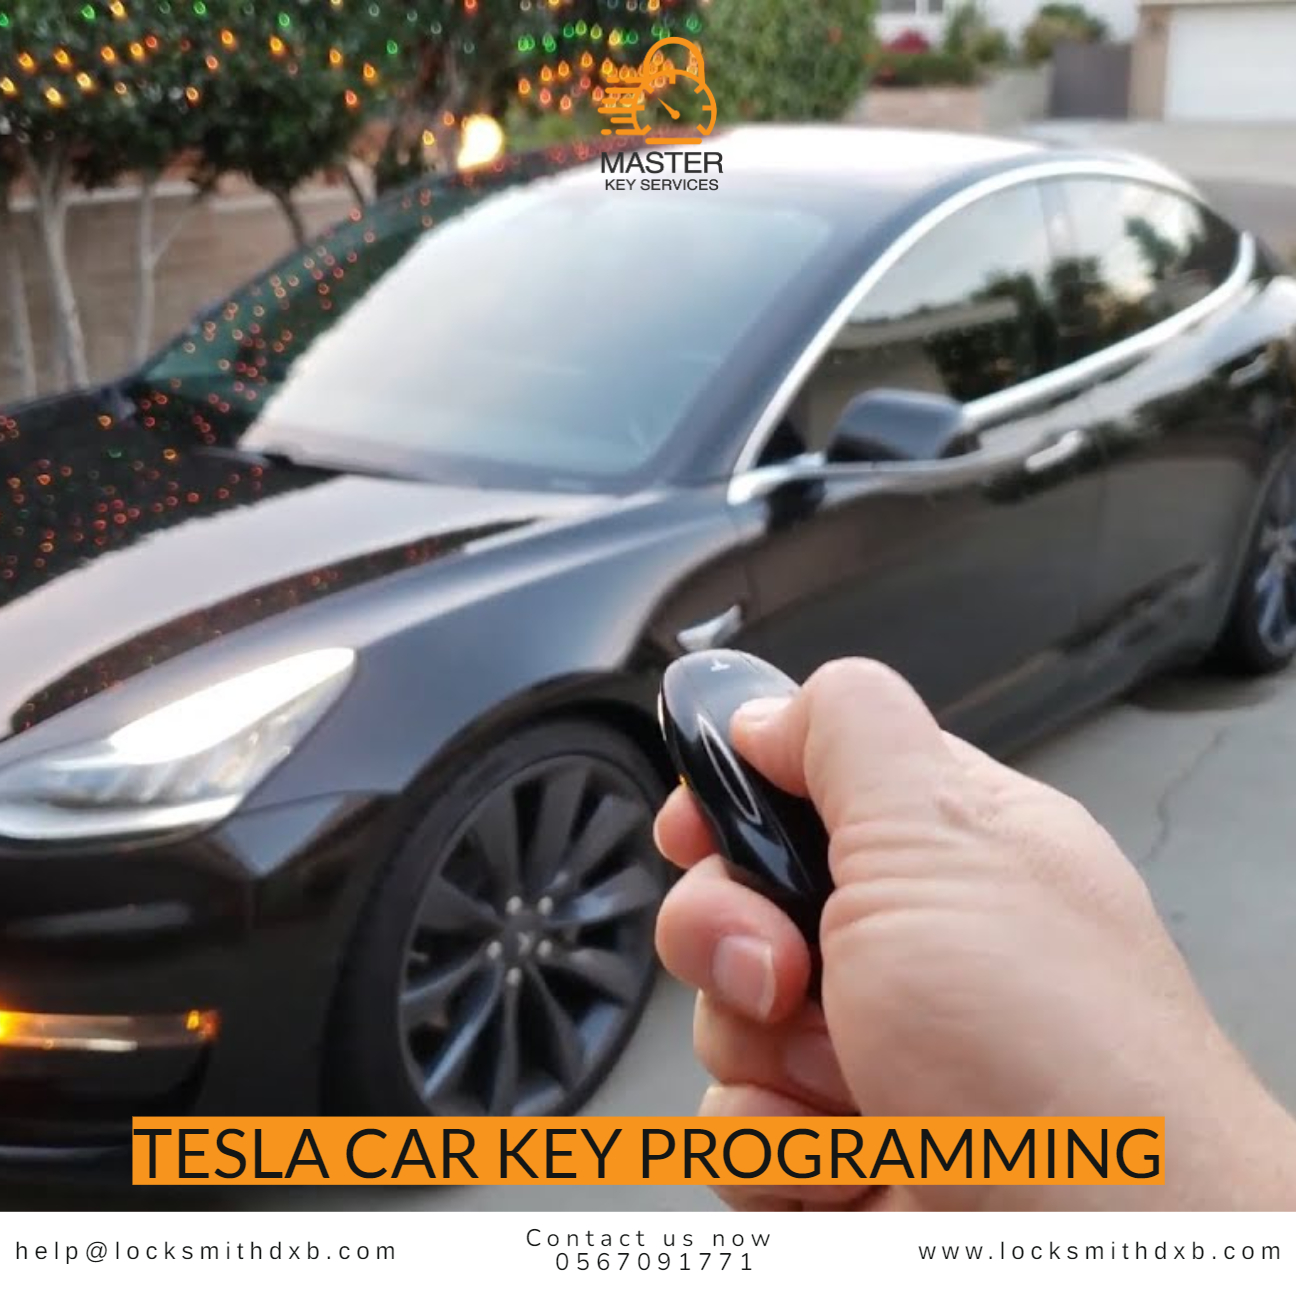 Tesla car key programming